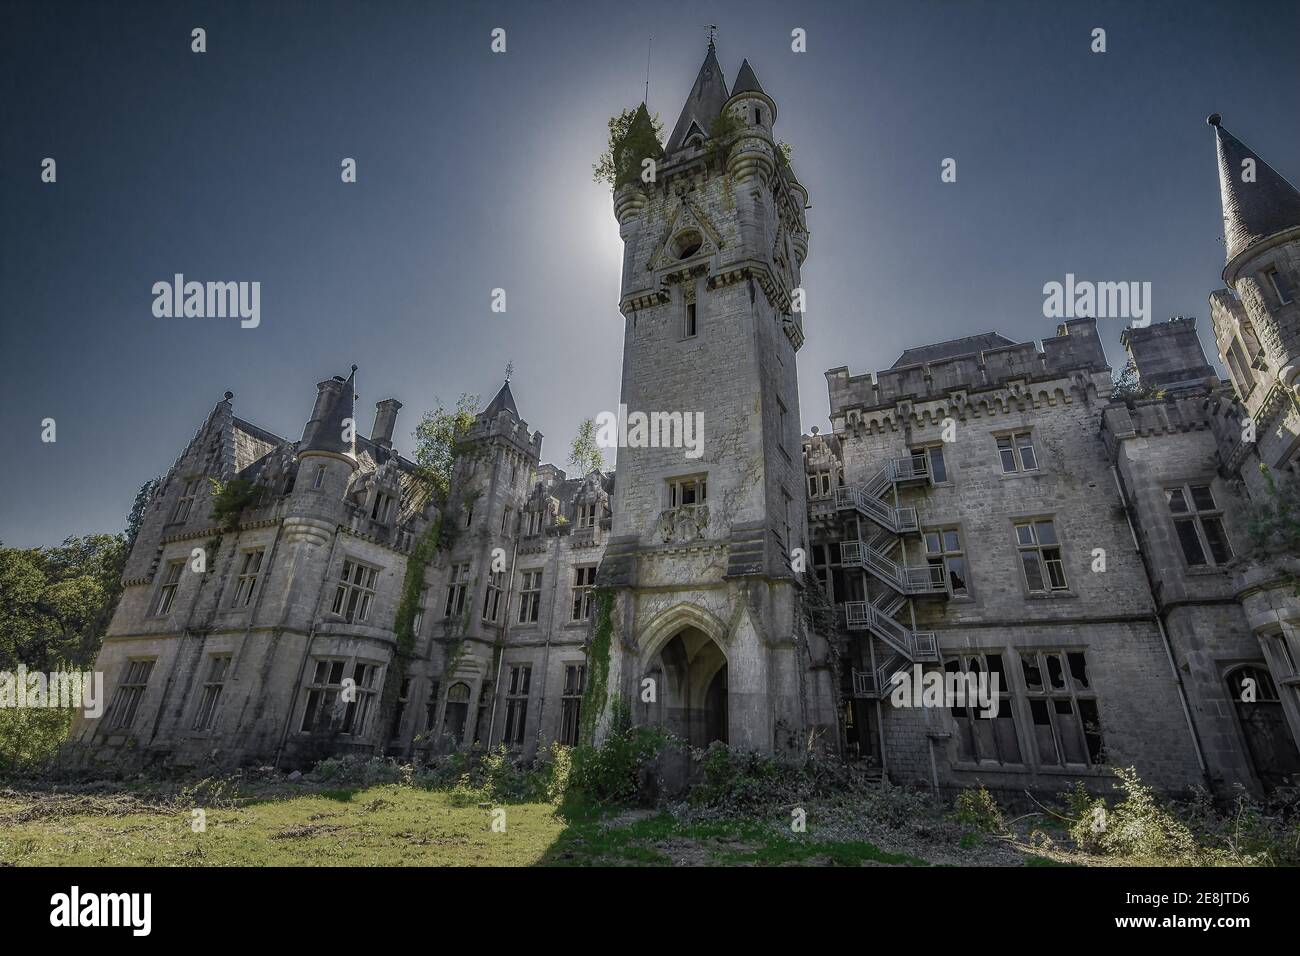 Lost Place, ruined castle, Chateau Miranda or Chateau de Noisy, near Celles, province of Namur, Belgium Stock Photo